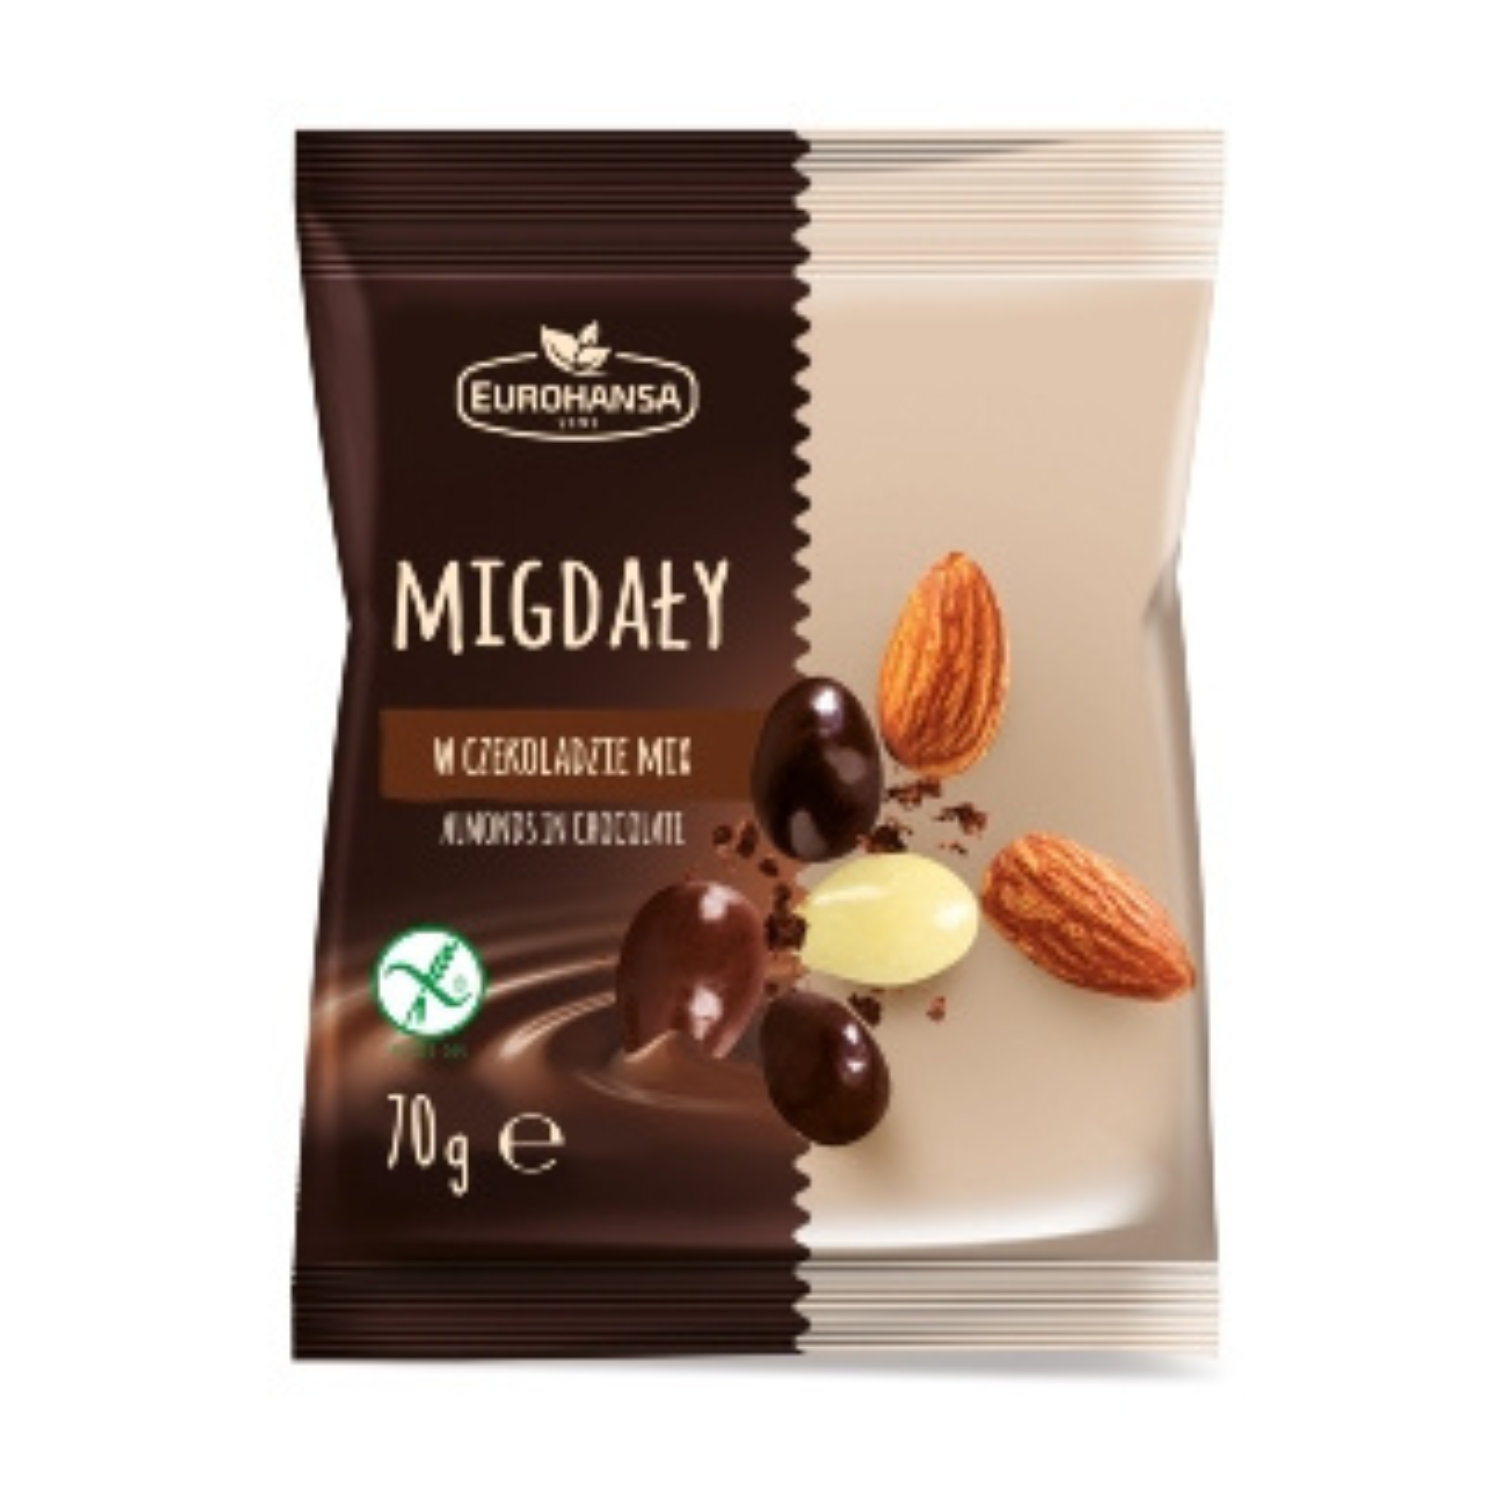 Migdale in mix de ciocolata, 70 g, Eurohansa